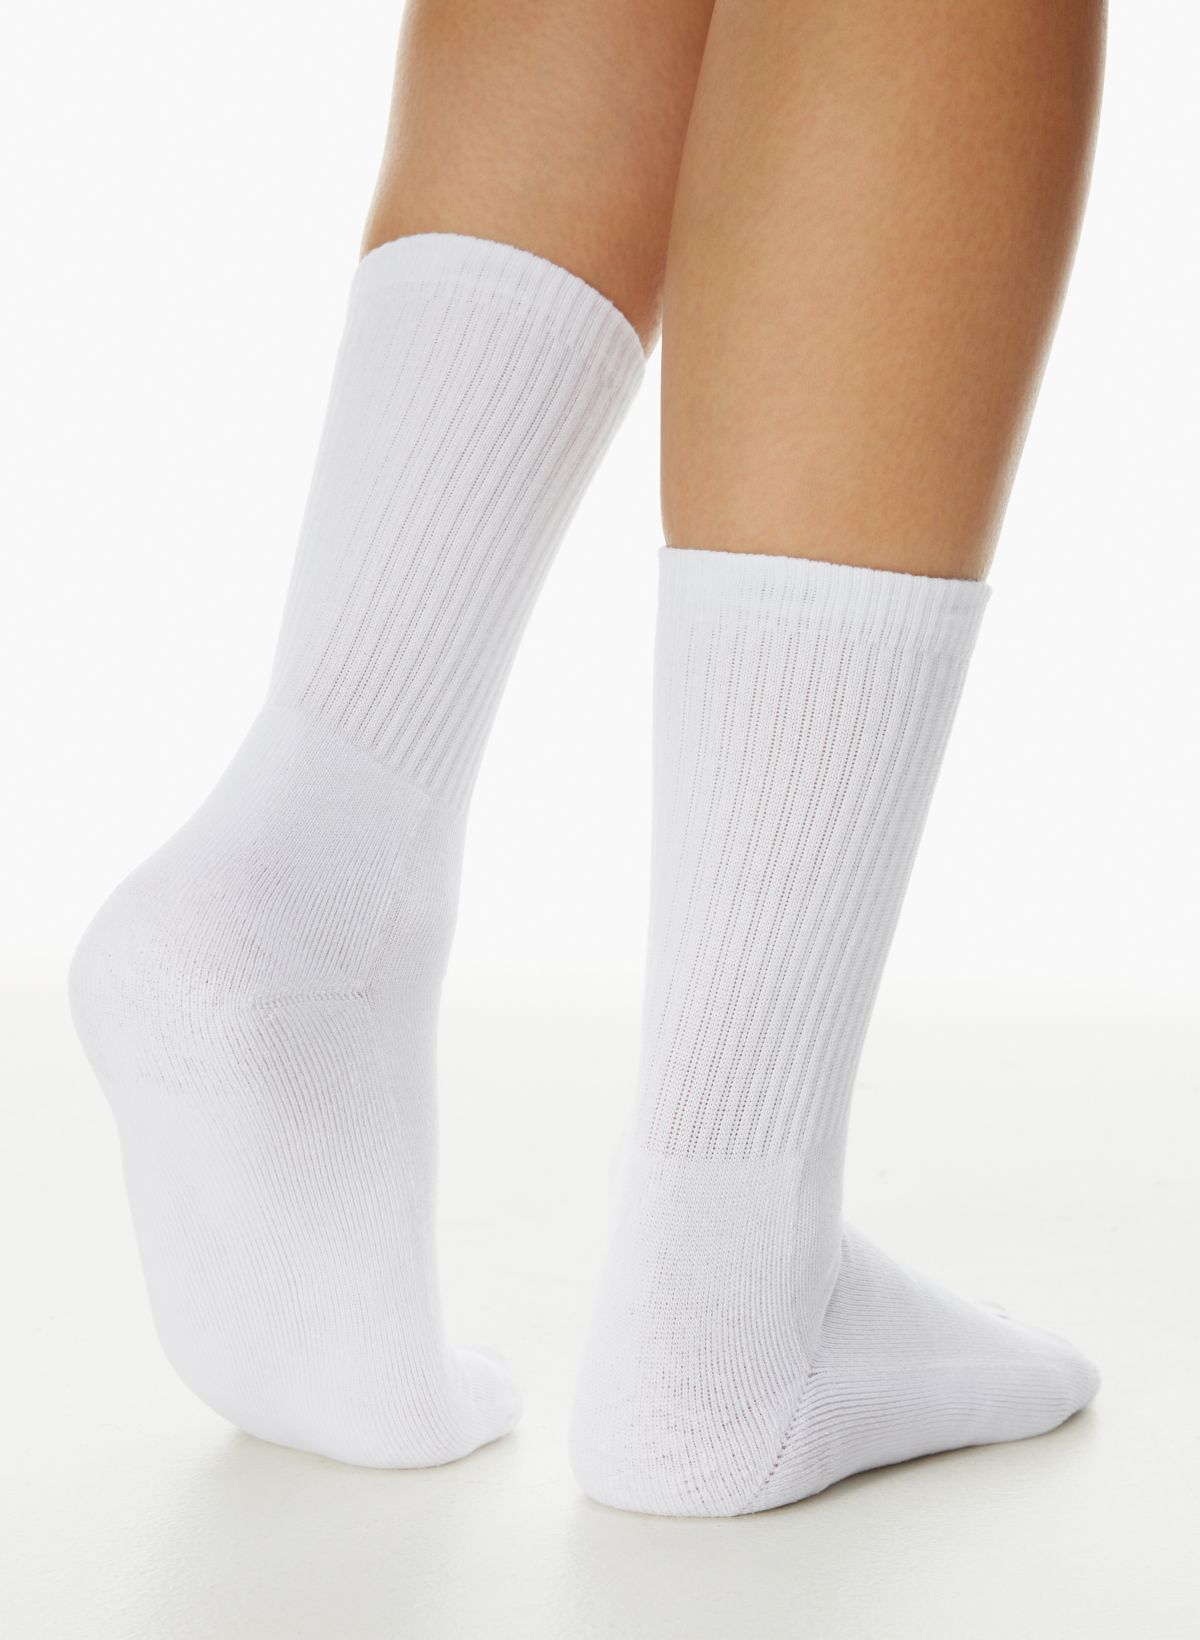 adidas Originals 2 pack ruffle socks in black and white